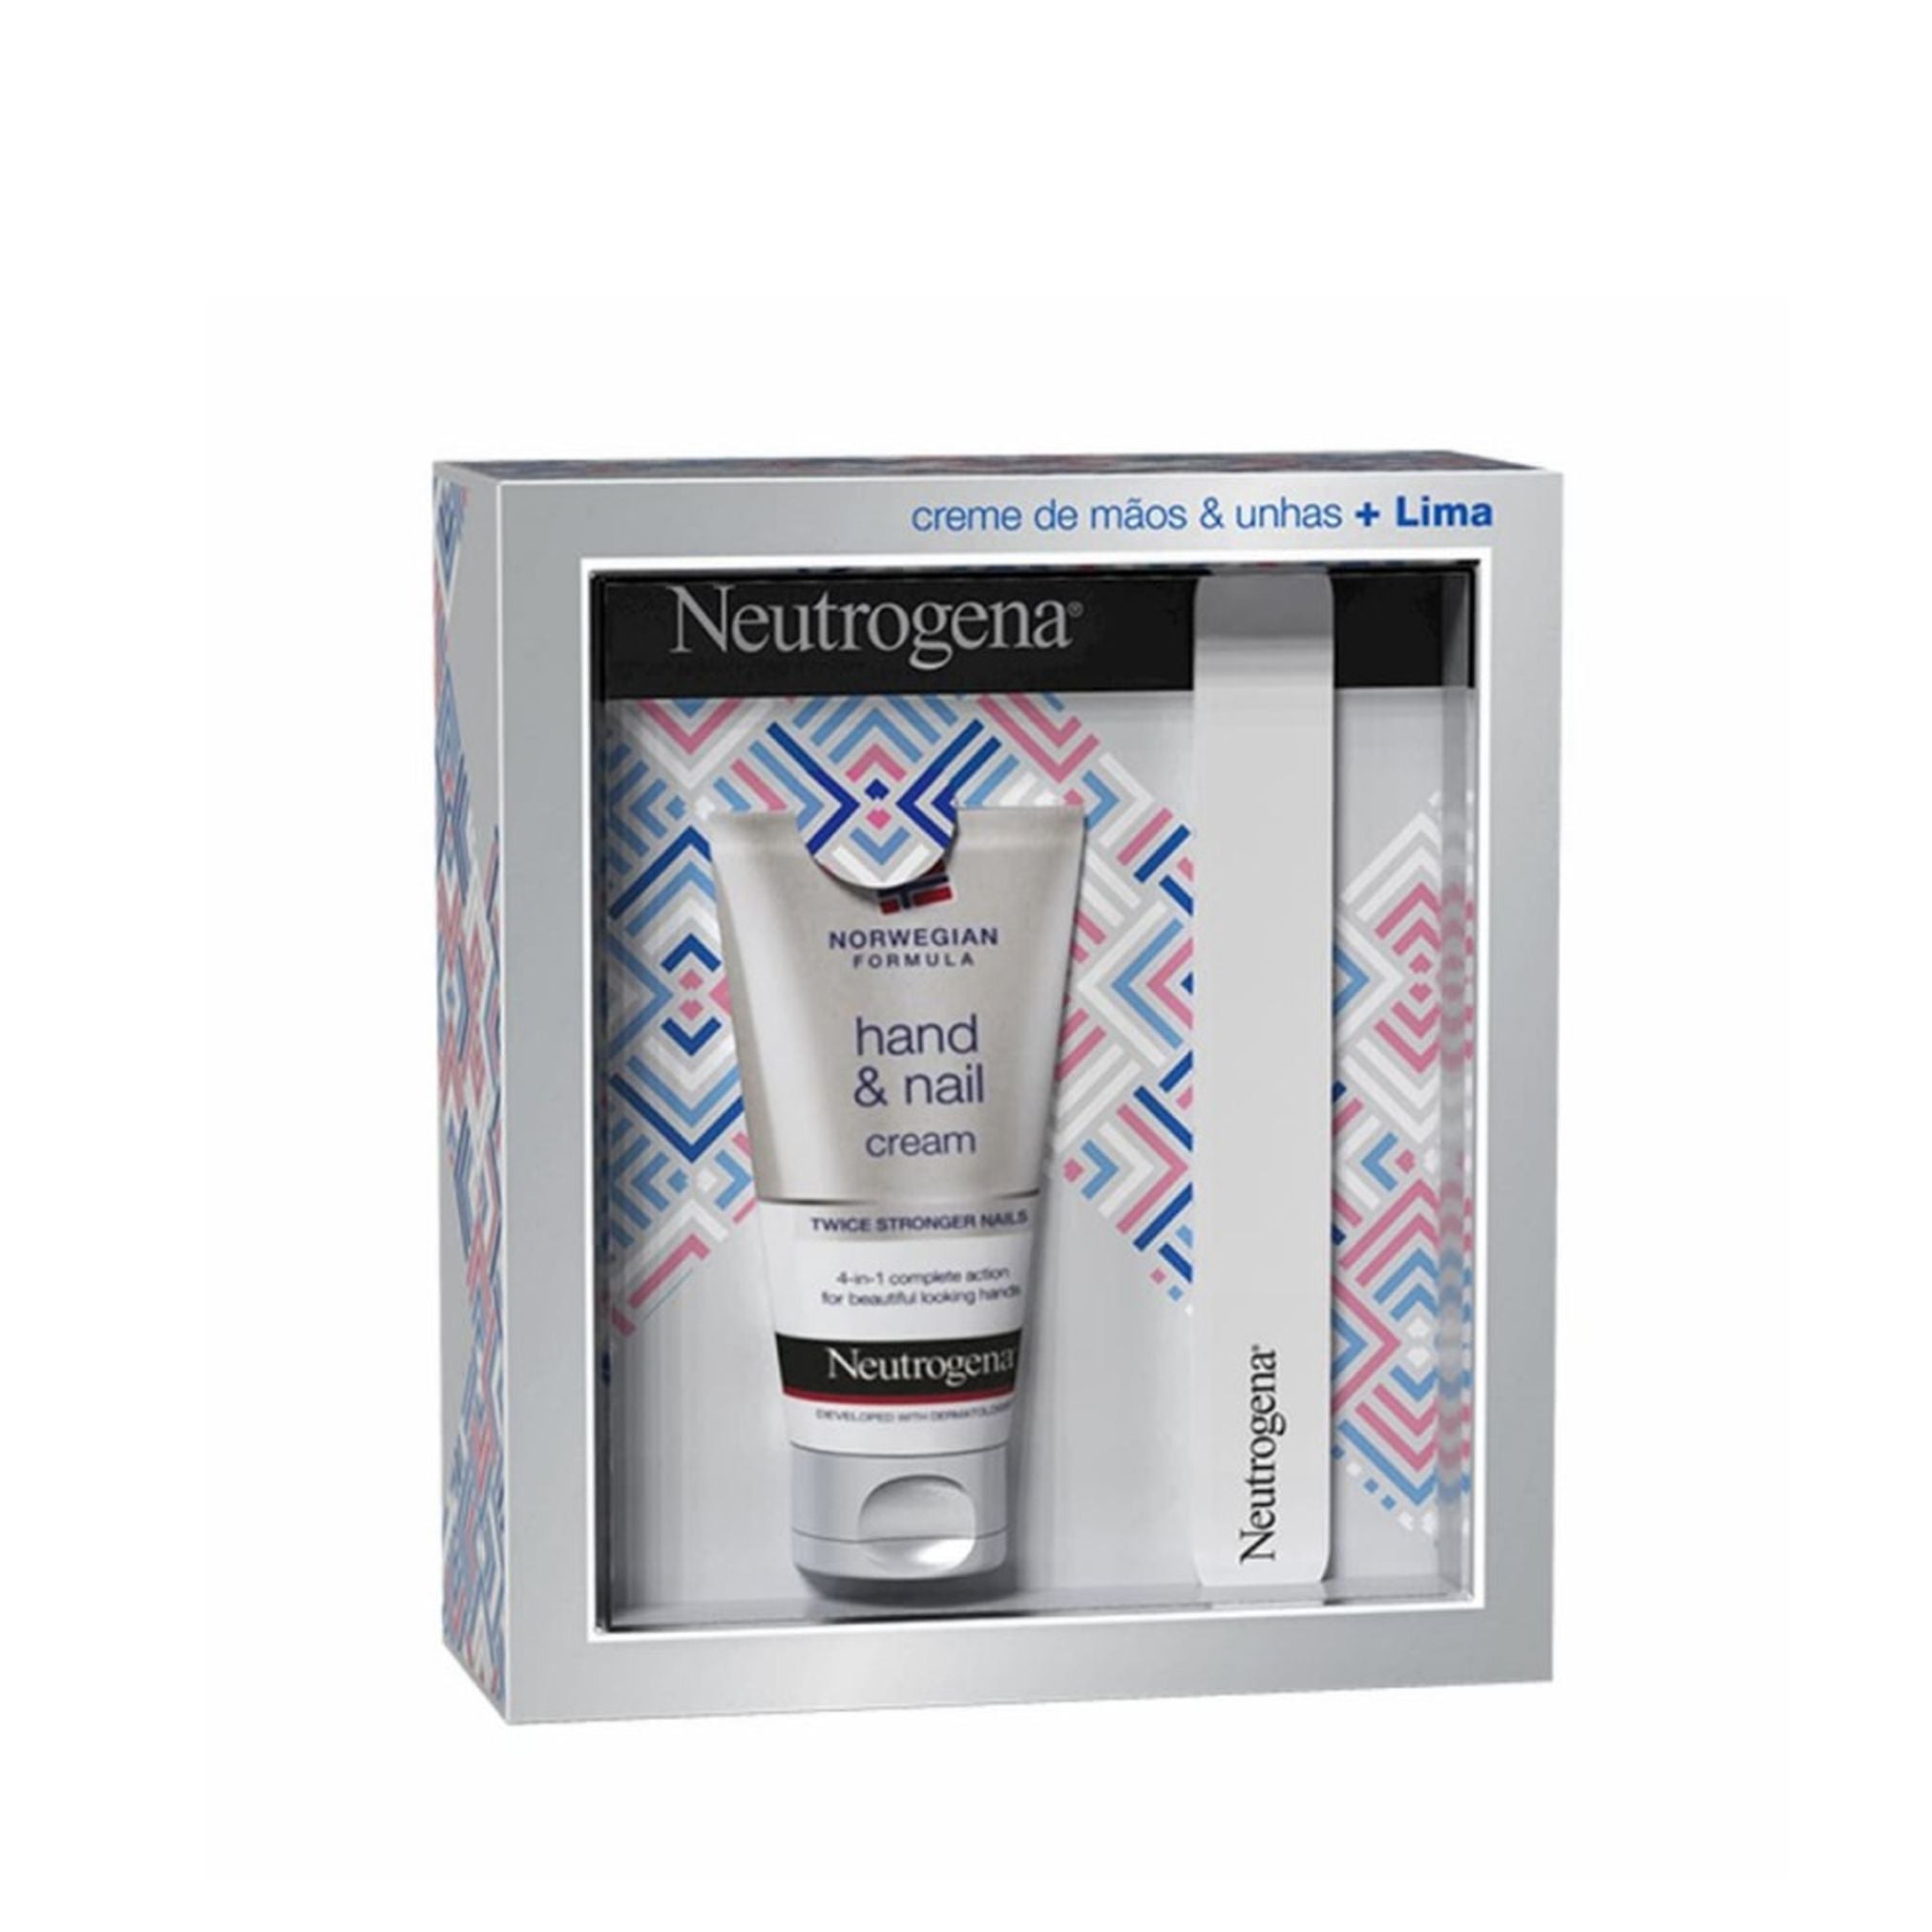 Neutrogena Promo Pack: Neutrogena Hand & Nail Cream 75ml + Nail File